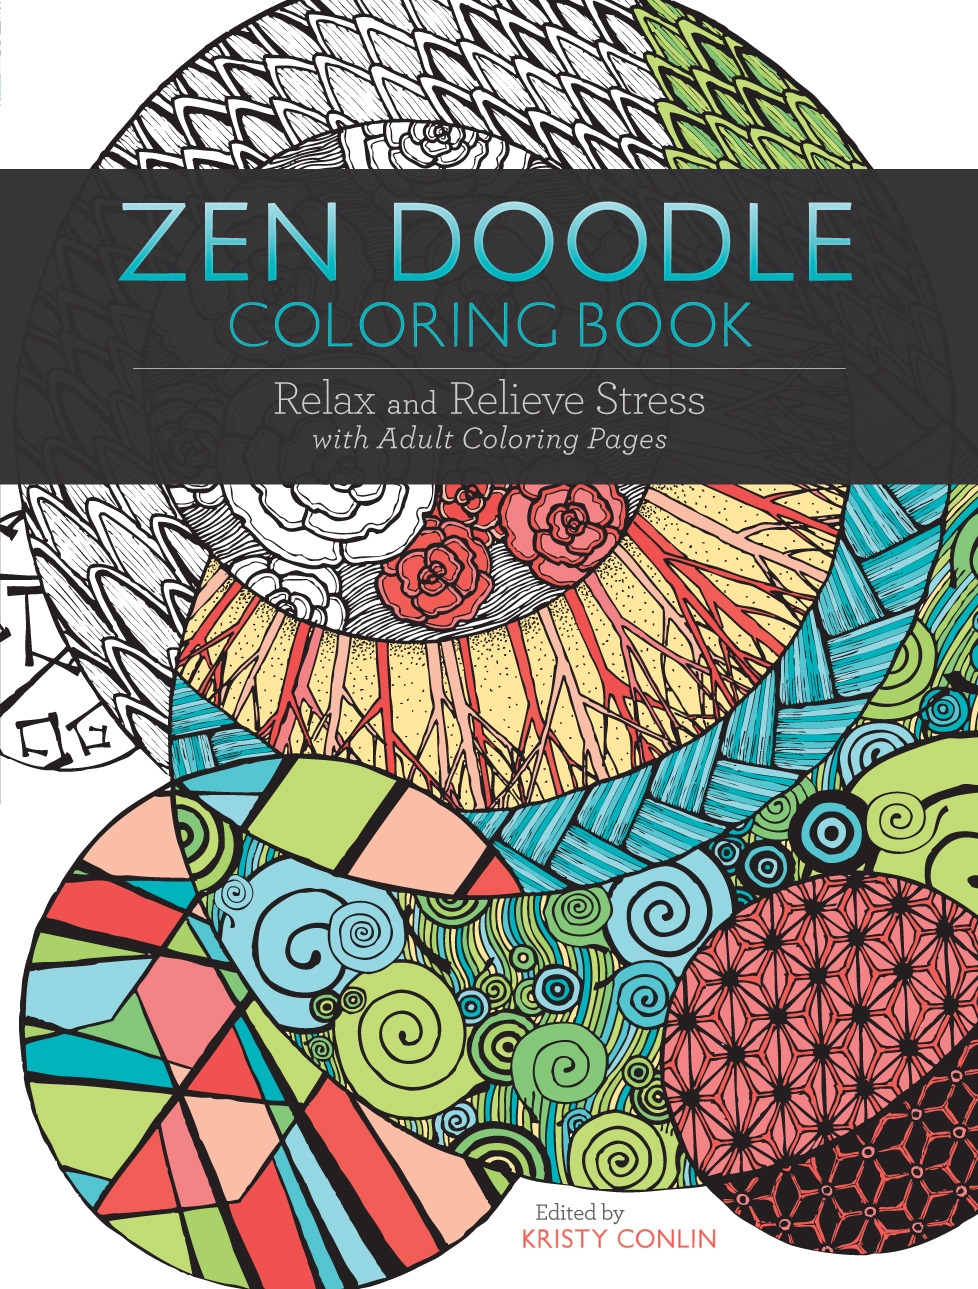 Download Zen Doodle Coloring Book By Kristy Conlin Penguin Books Australia